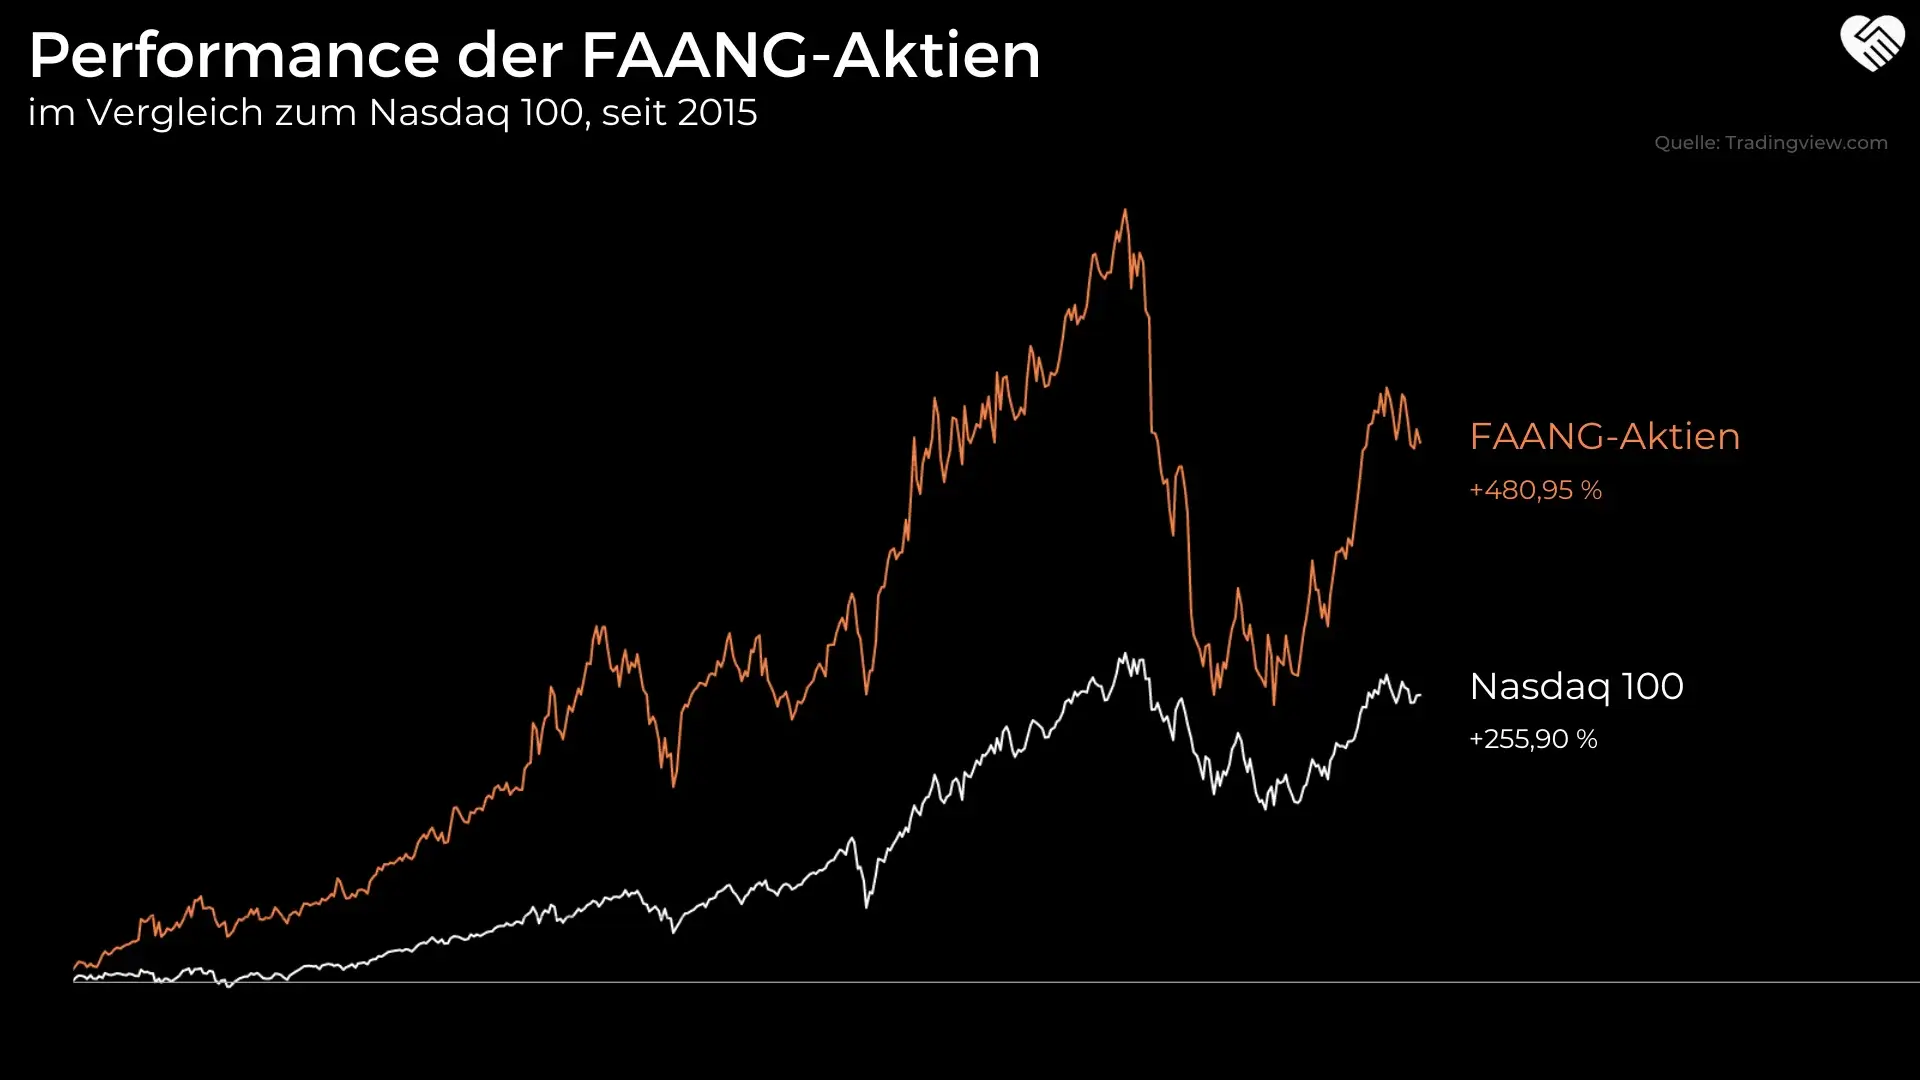 Performancevergleich FAANG-Aktien vs. Nasdaq 100